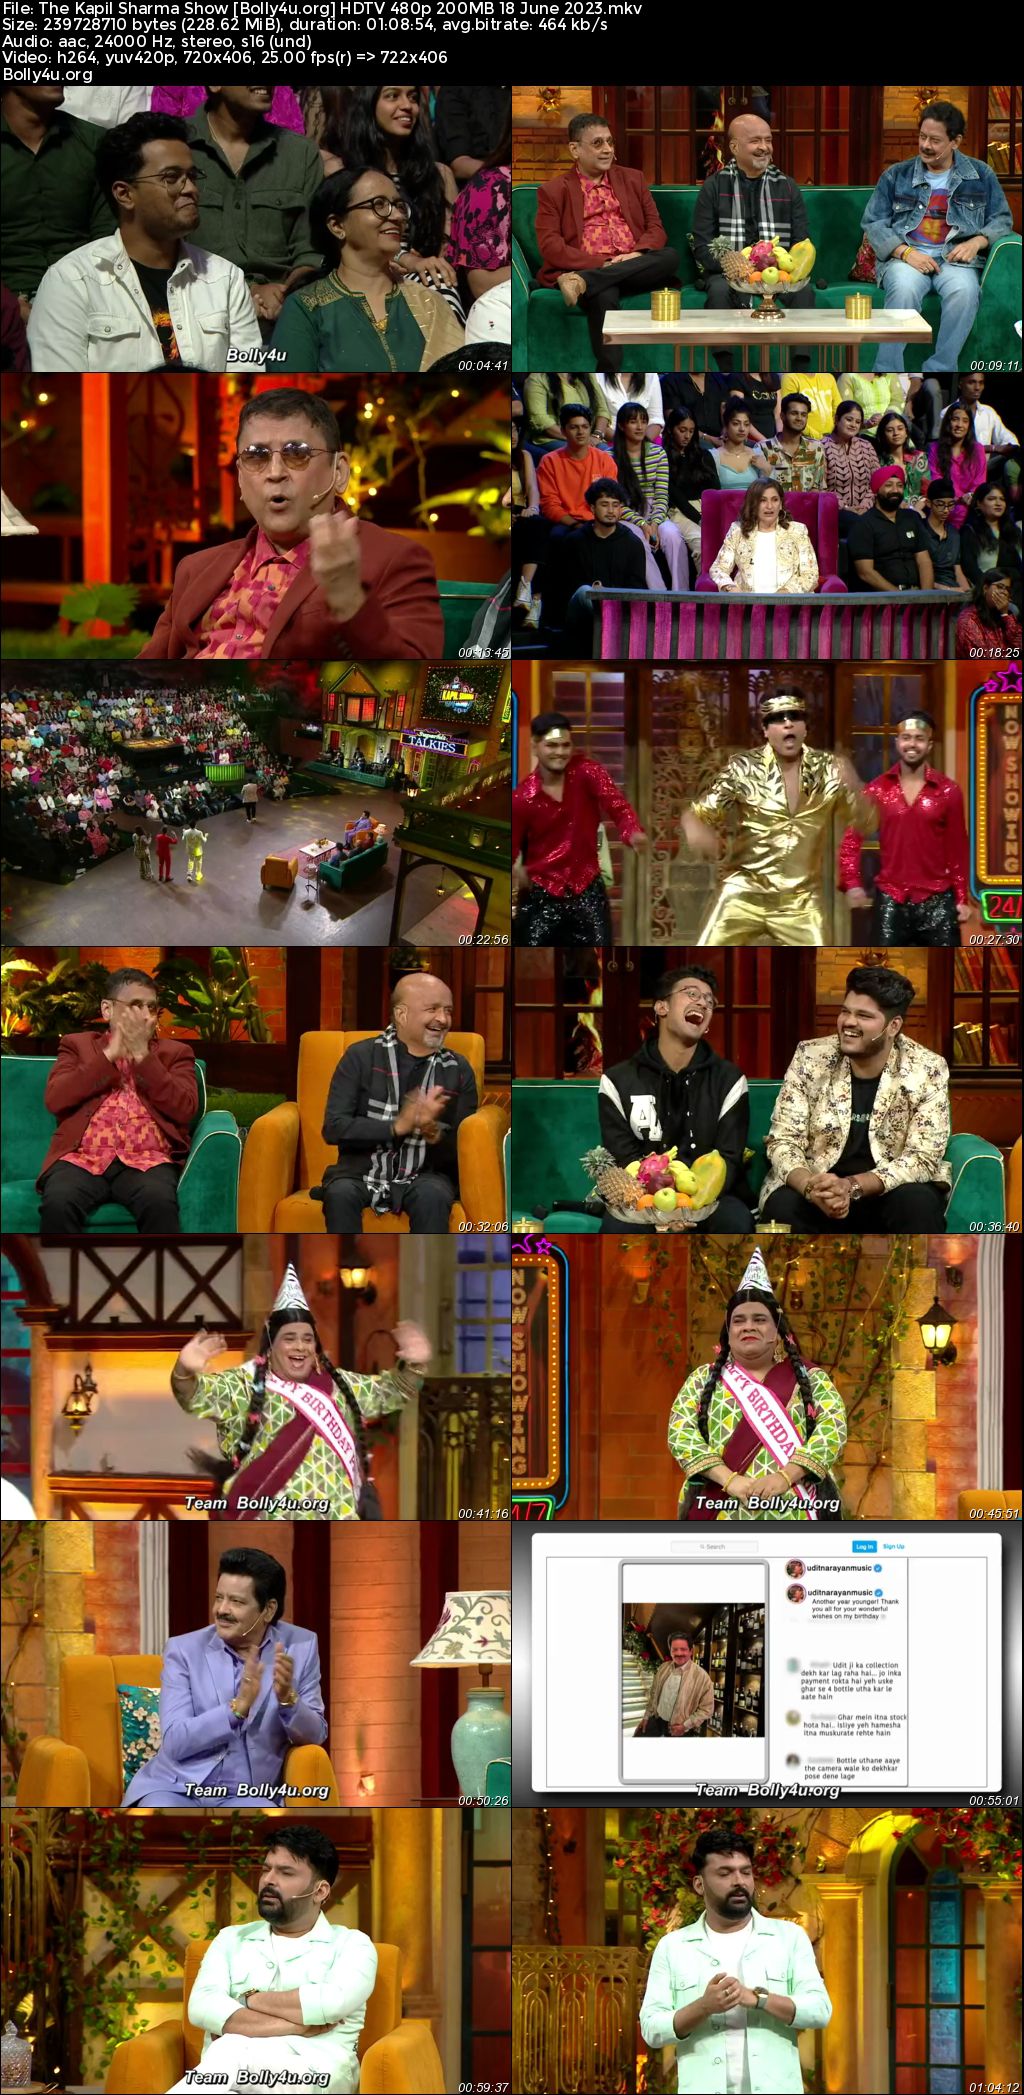 The Kapil Sharma Show HDTV 480p 200MB 18 June 2023 Download